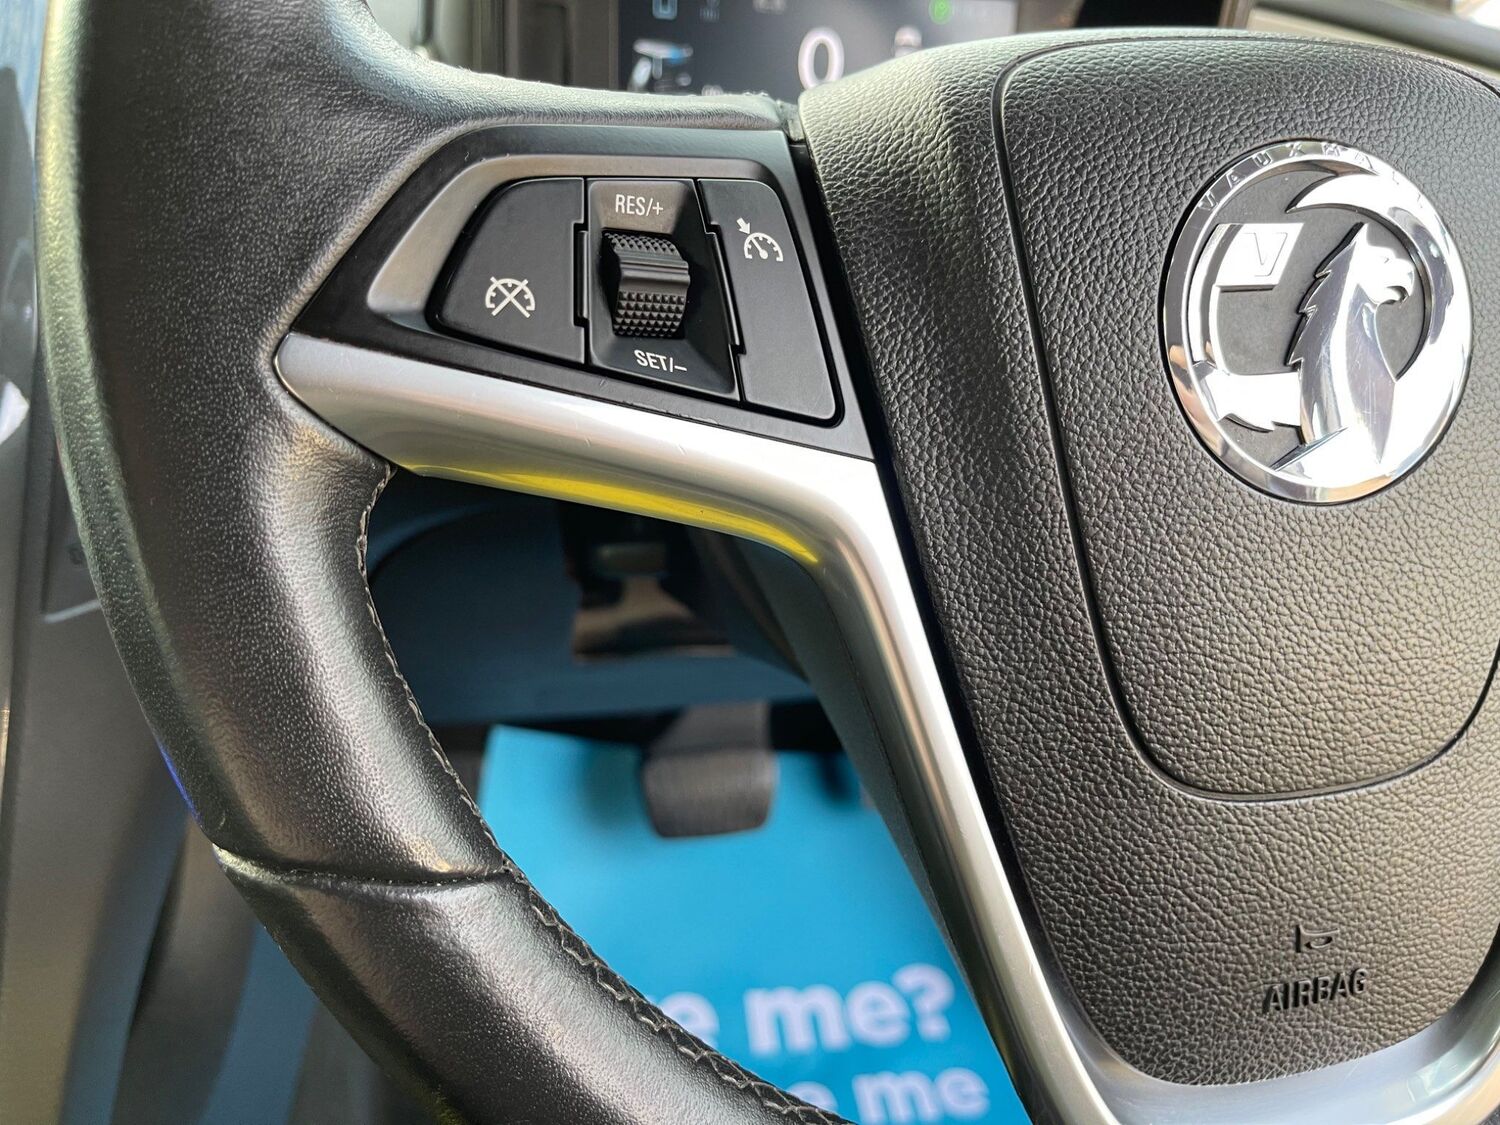 Airbag set Dashboard Opel Astra K (2015-.) buy ? - Airbag.eu